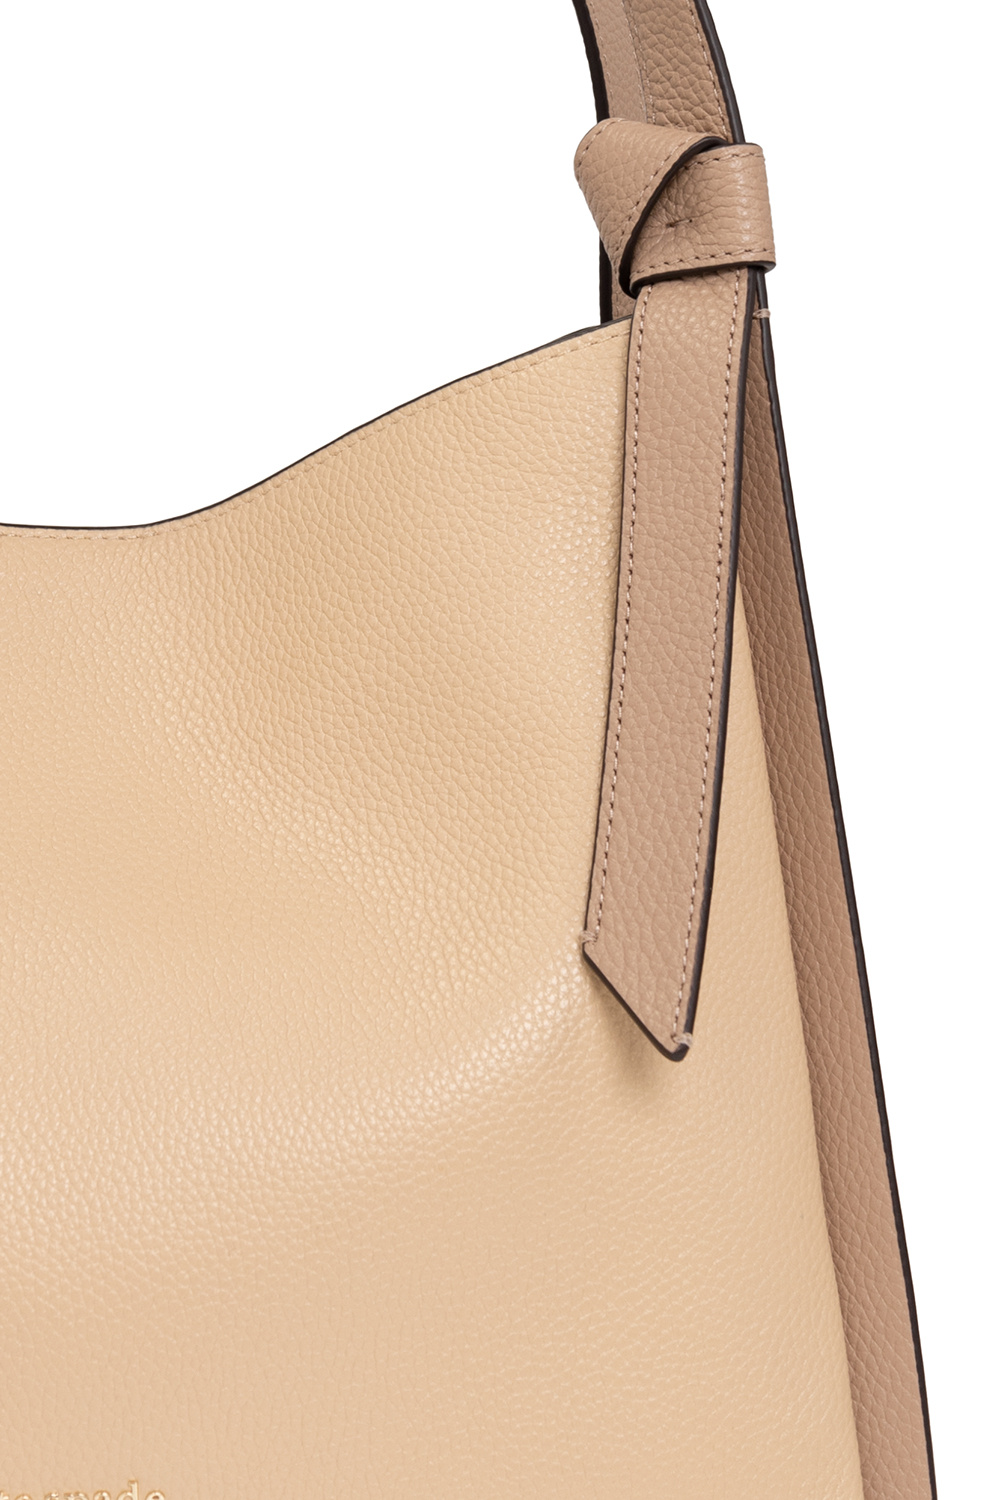 Kate Spade ‘Knott Large’ smooth bag